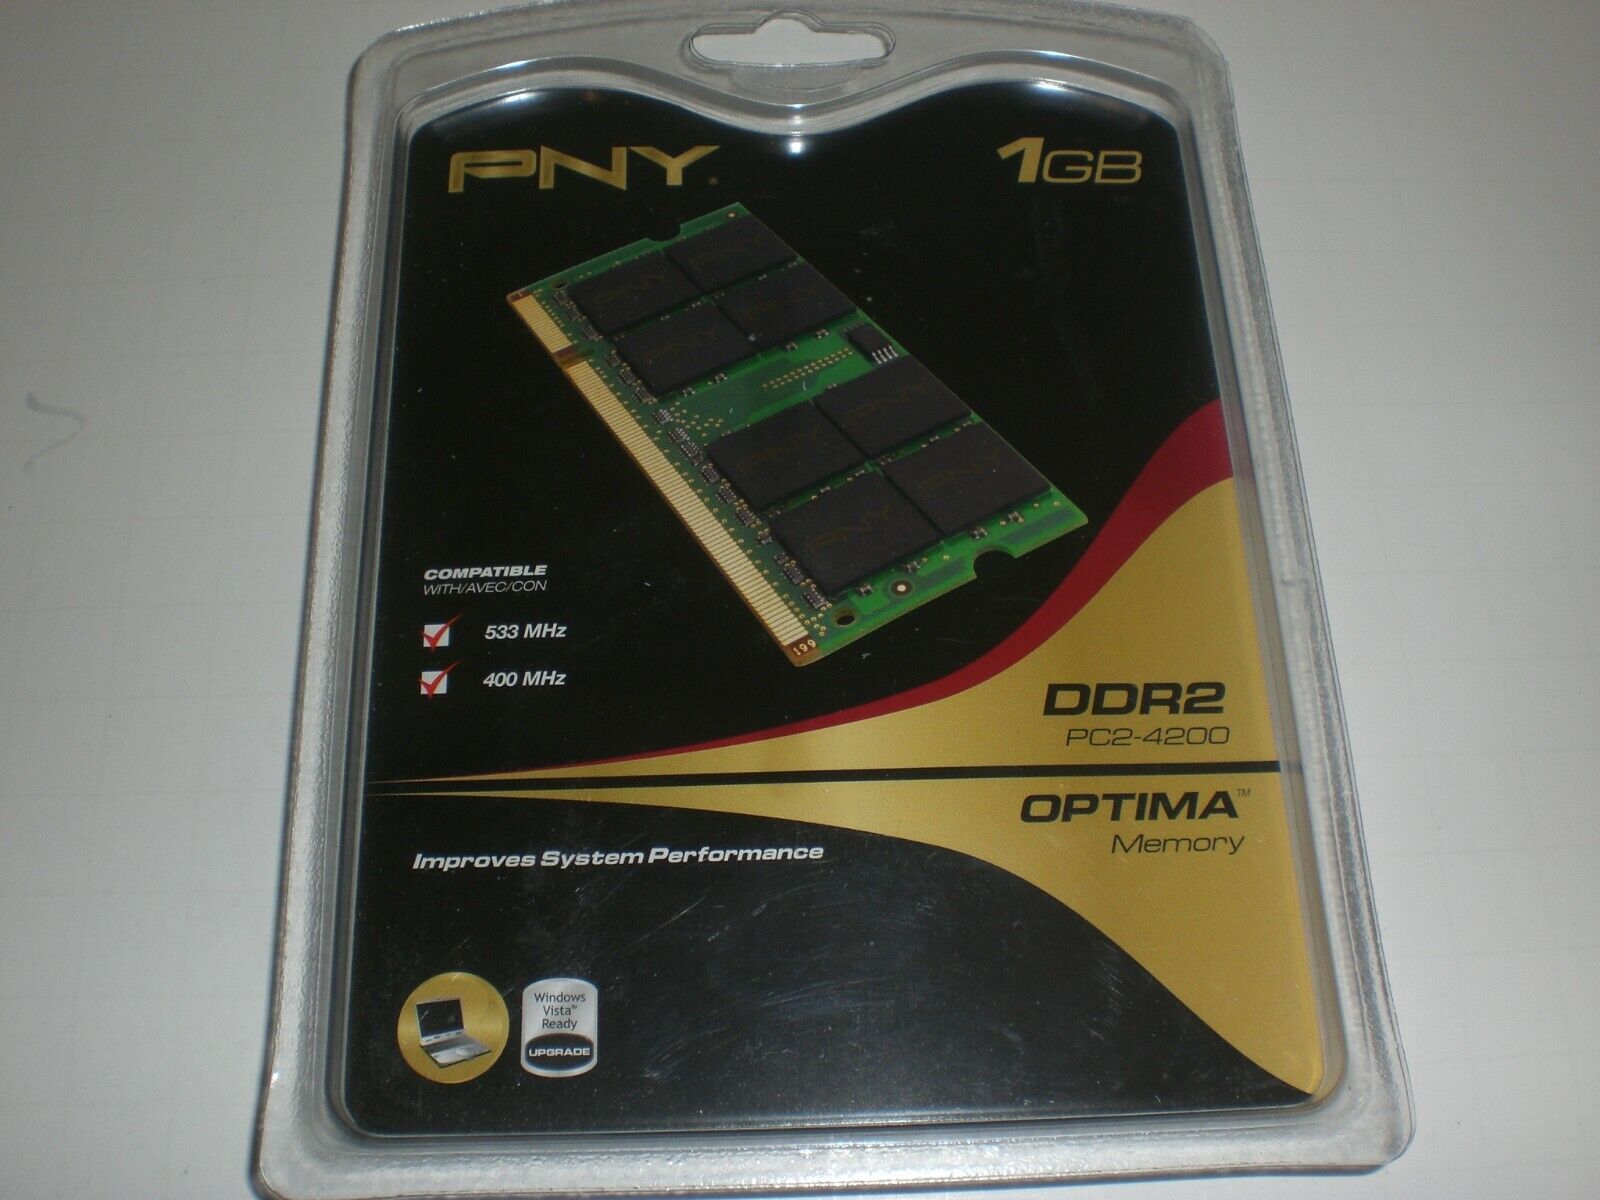 PNY 1 GB DDR2 PC2-4200 OPTIMA MEMORY